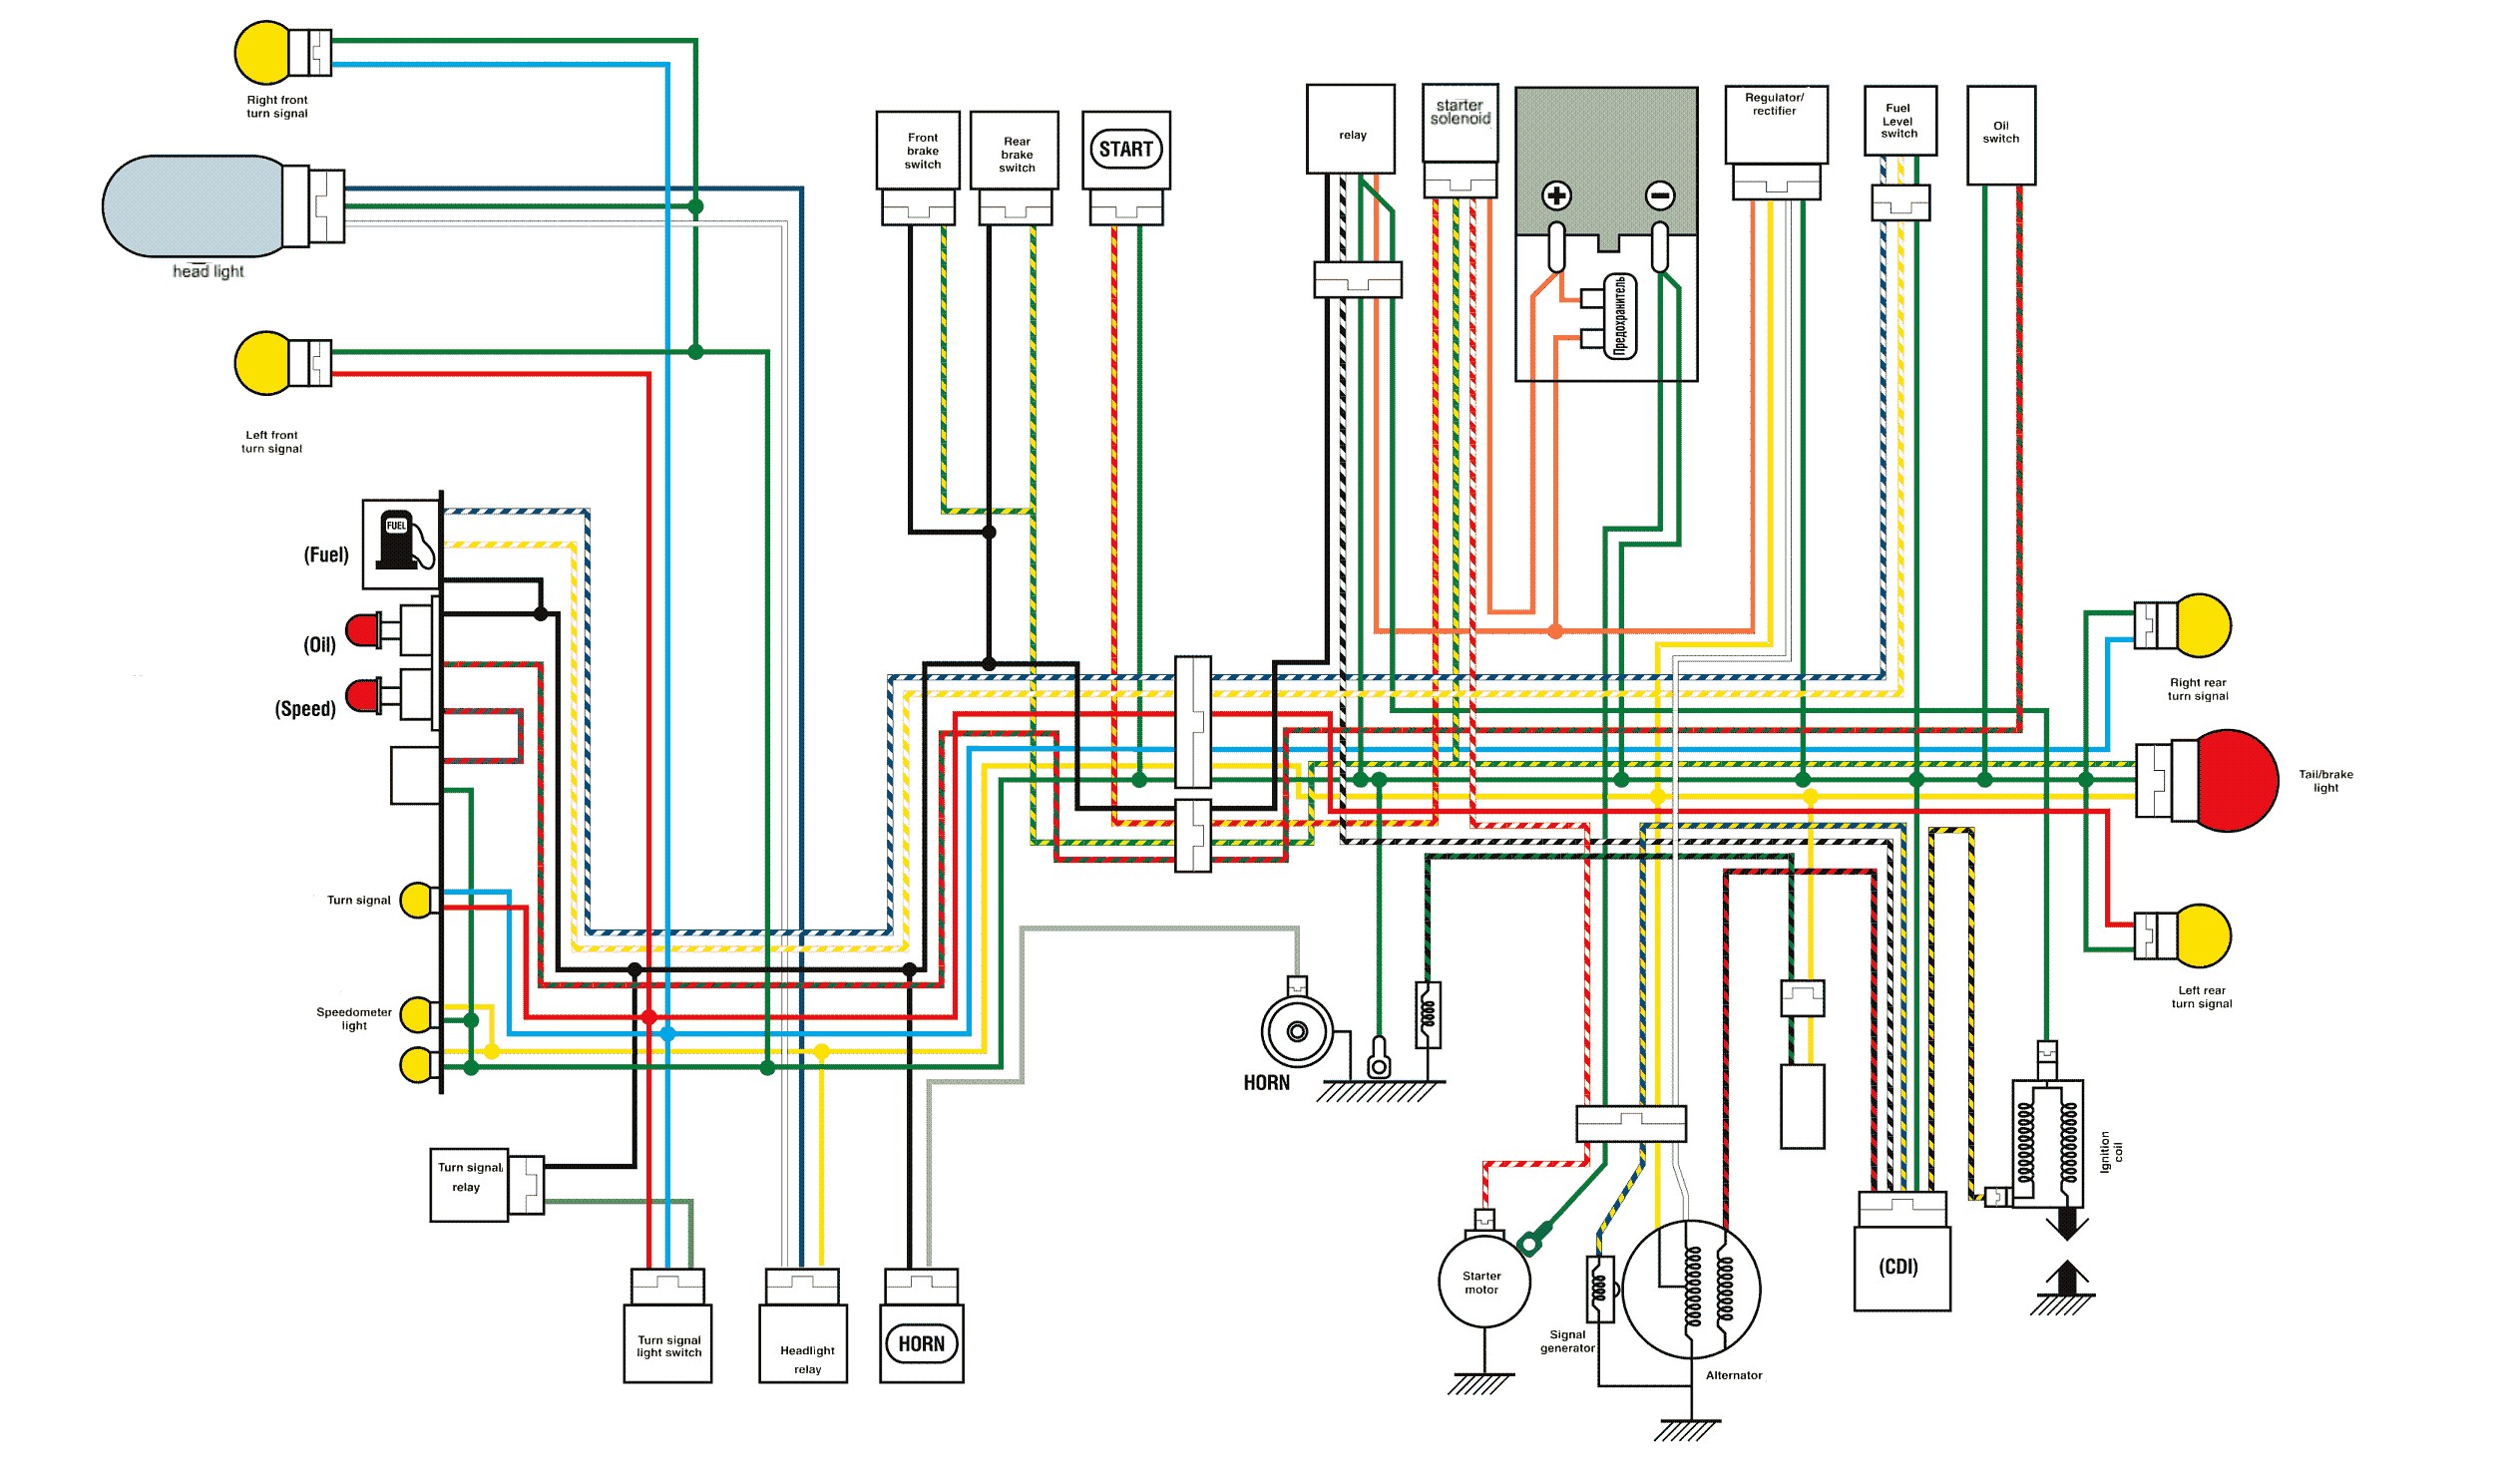 Xrm 110 Engine Diagram Xrm 110 Electrical Wiring Diagram Free Download Inside Of Xrm 110 Engine Diagram